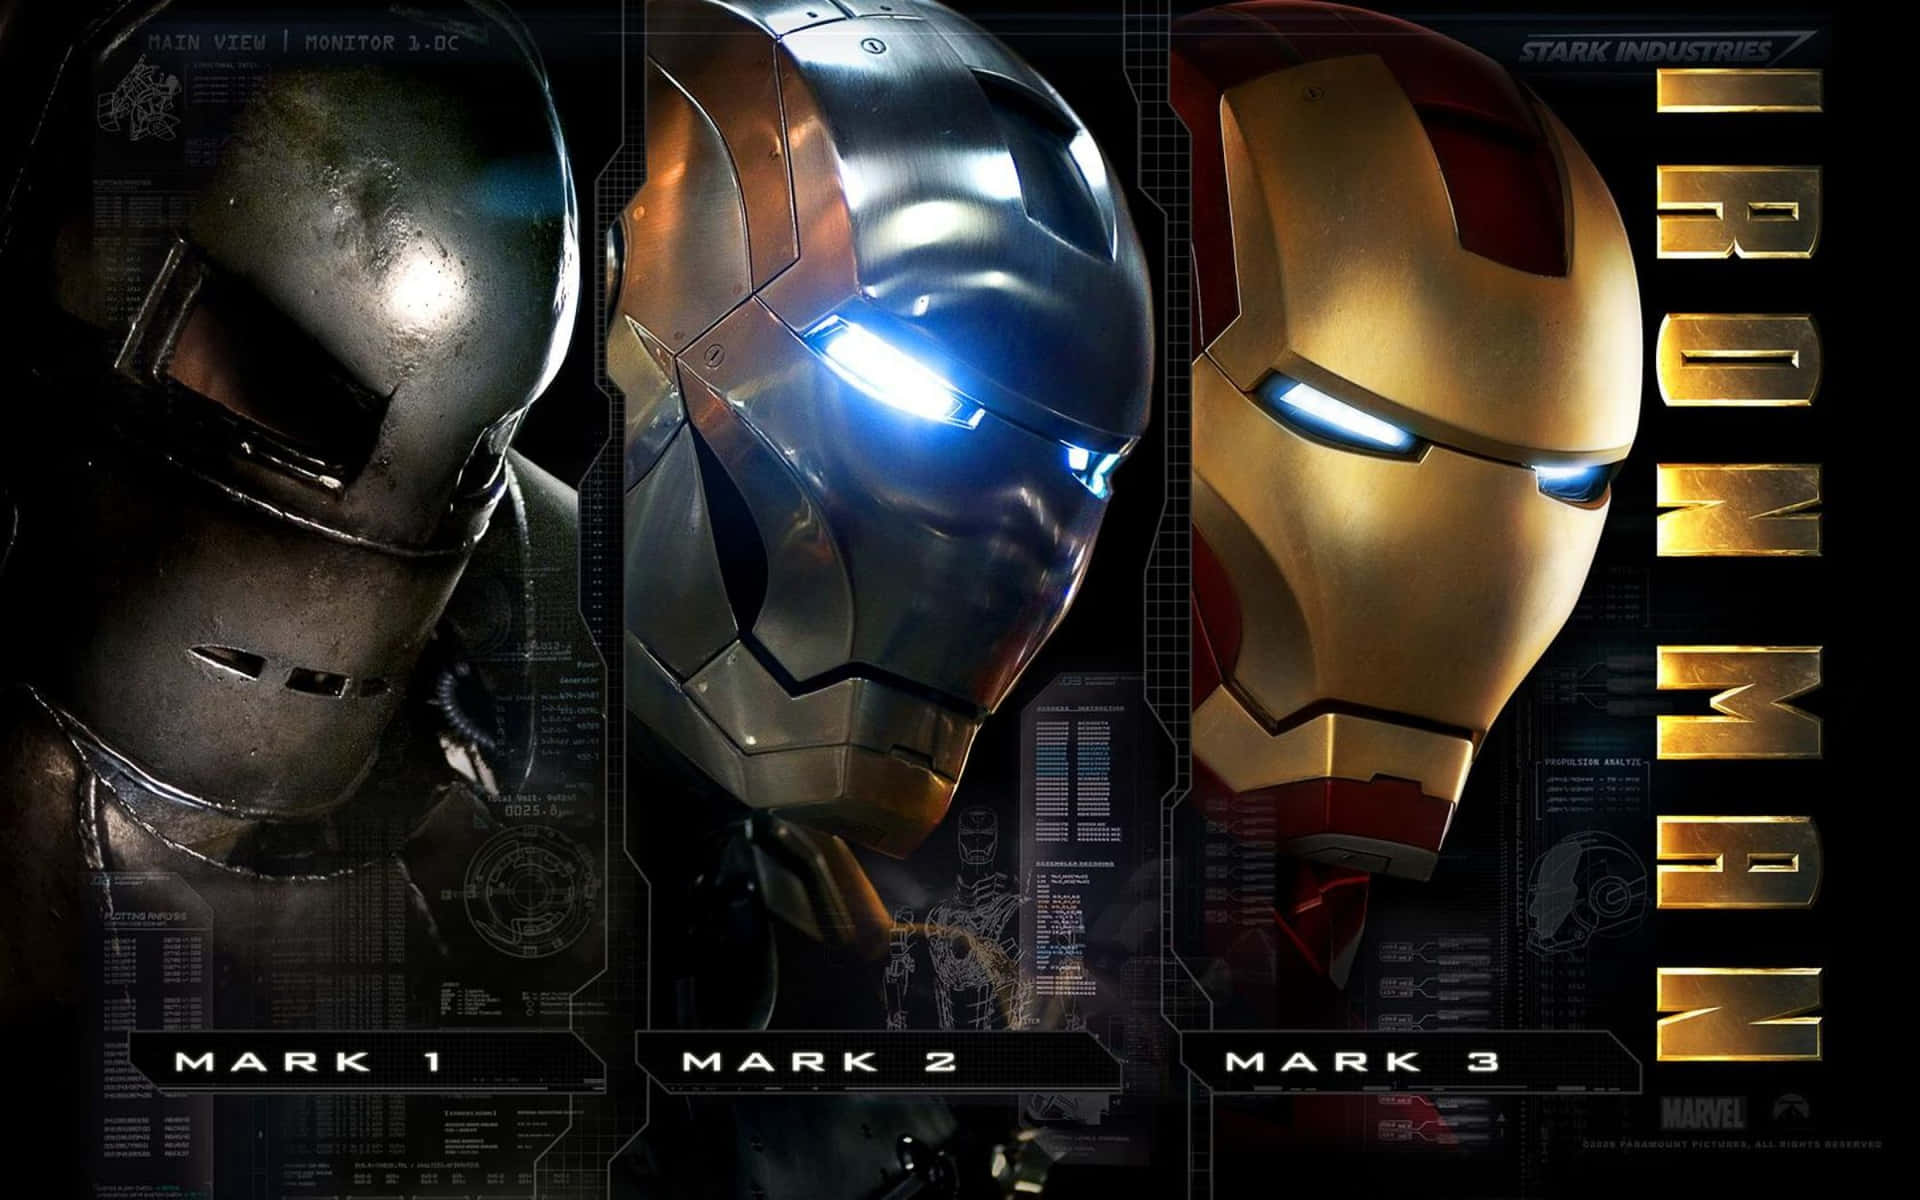 Iron Man, a Superhero from Marvel